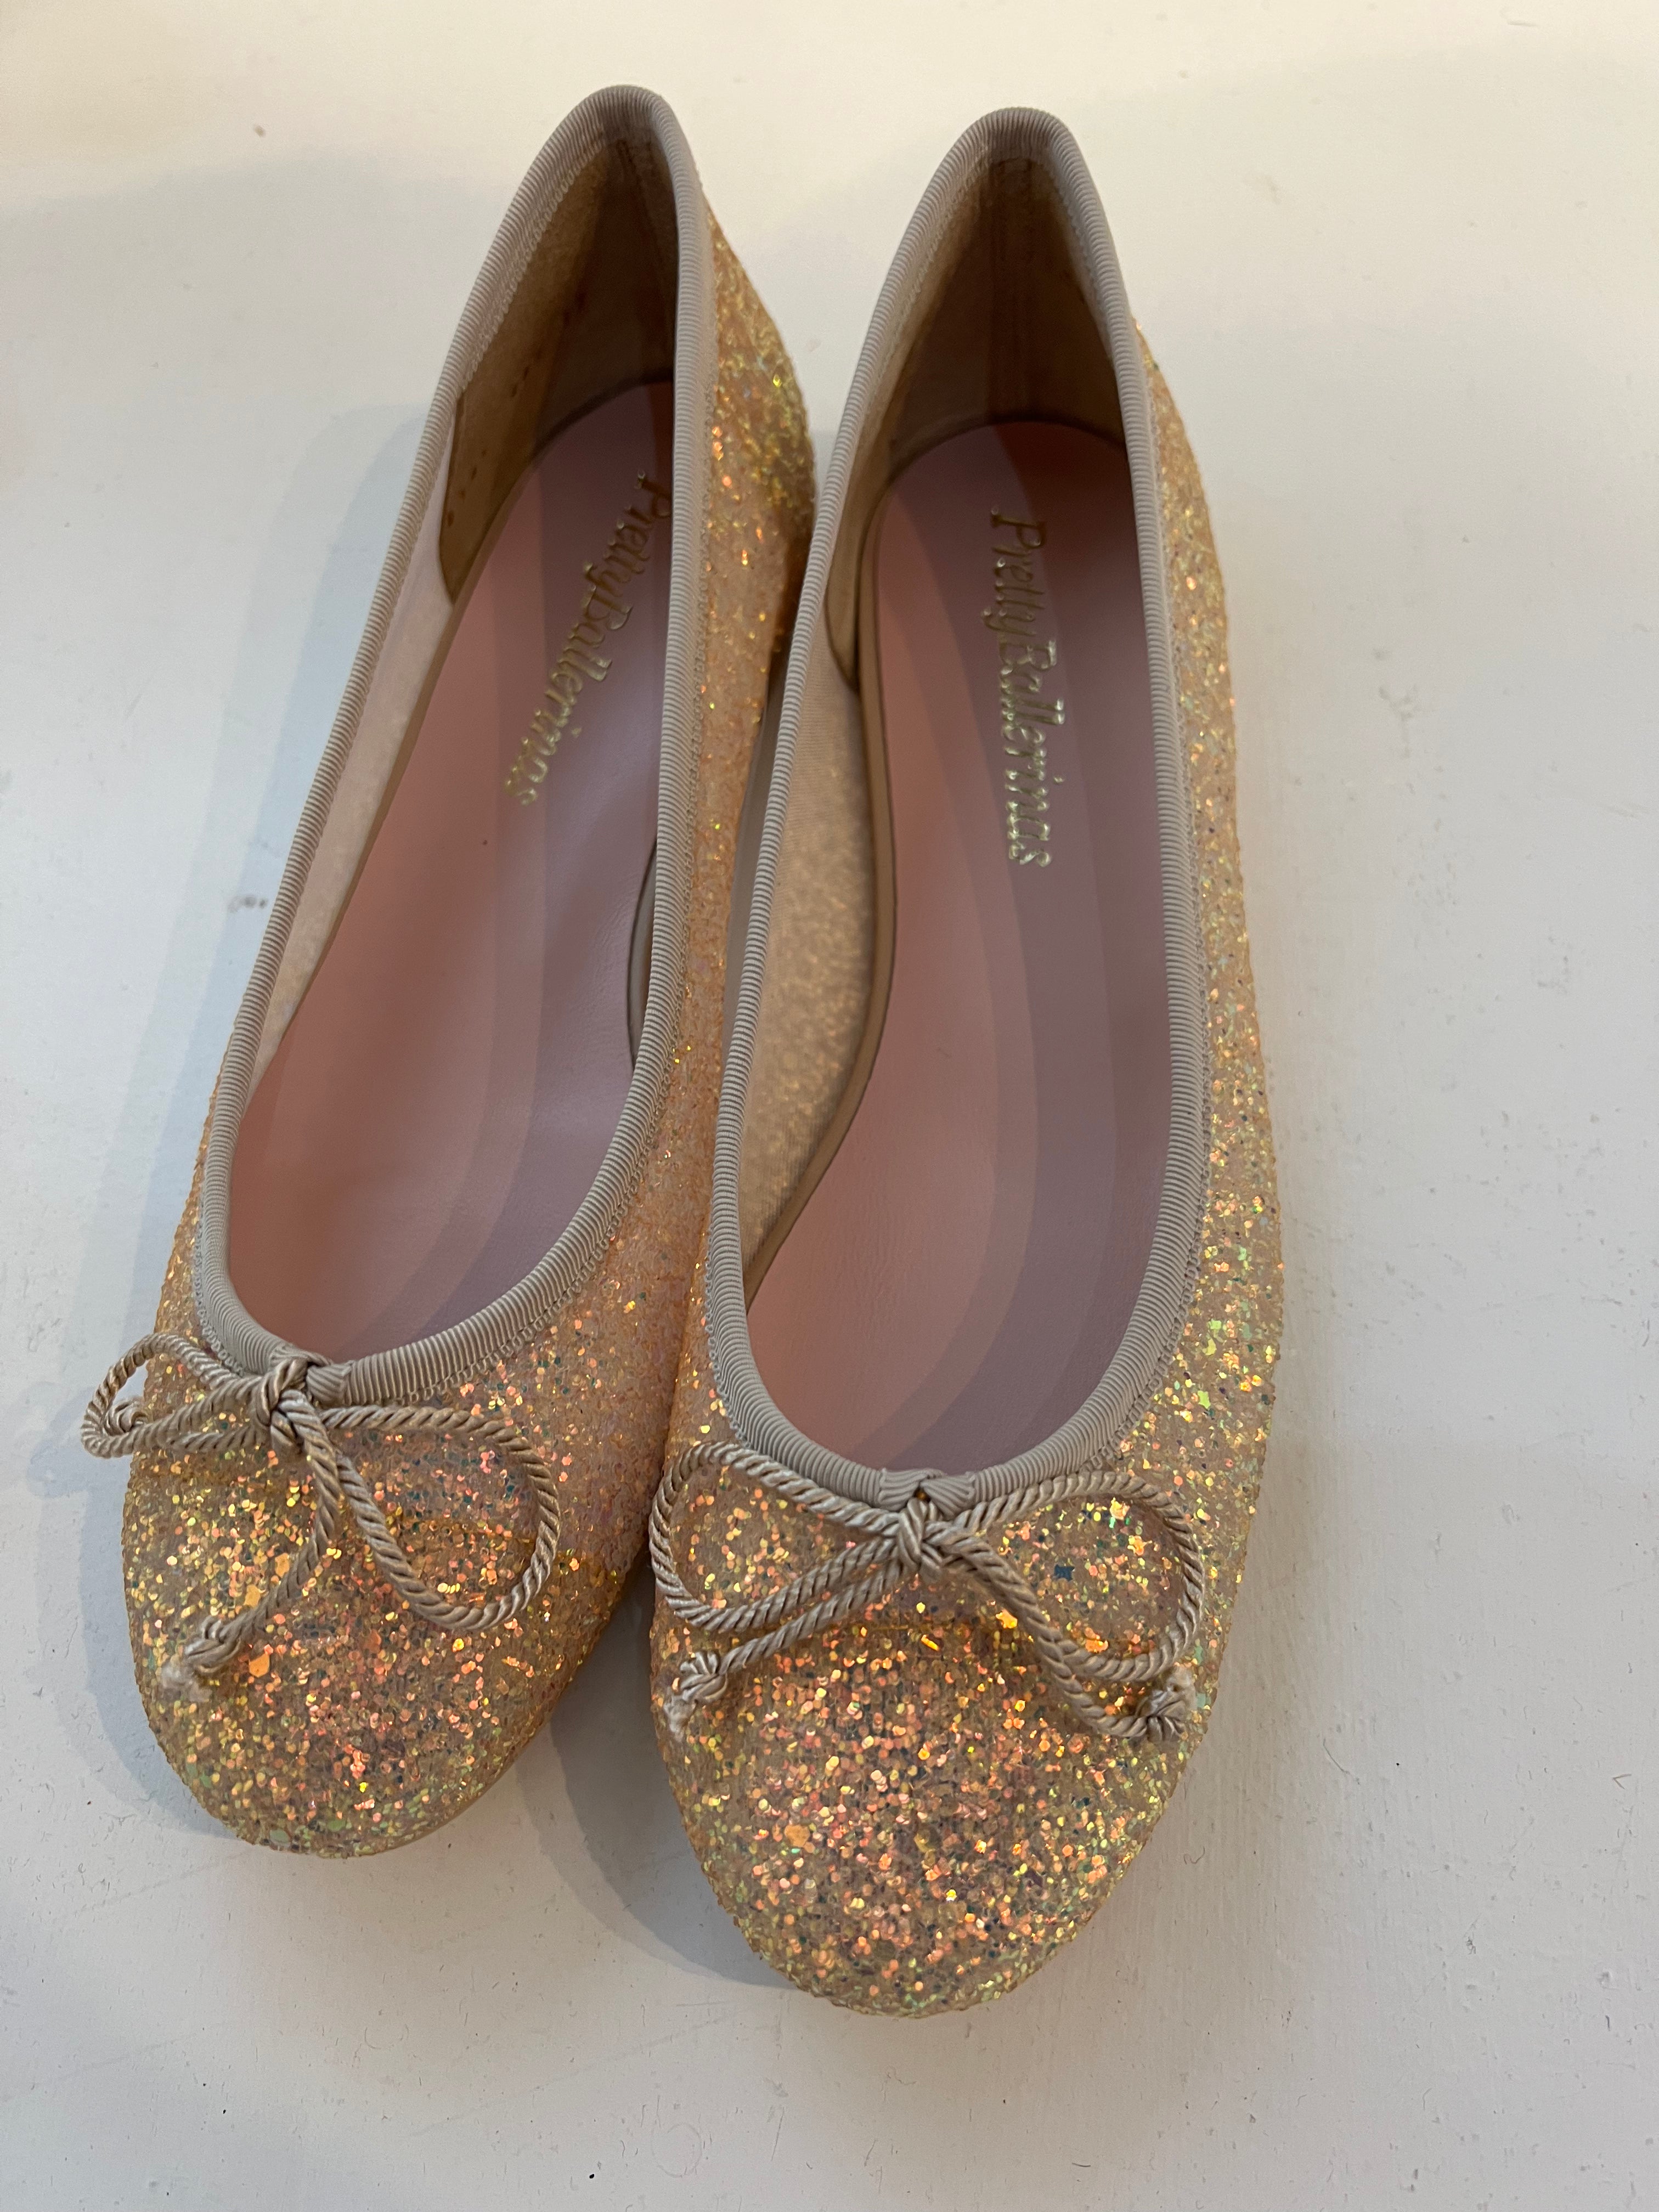 Hetre Alresford Hampshire Shoe Store Pretty Ballerinas Gold Glitter Ballet Pump 